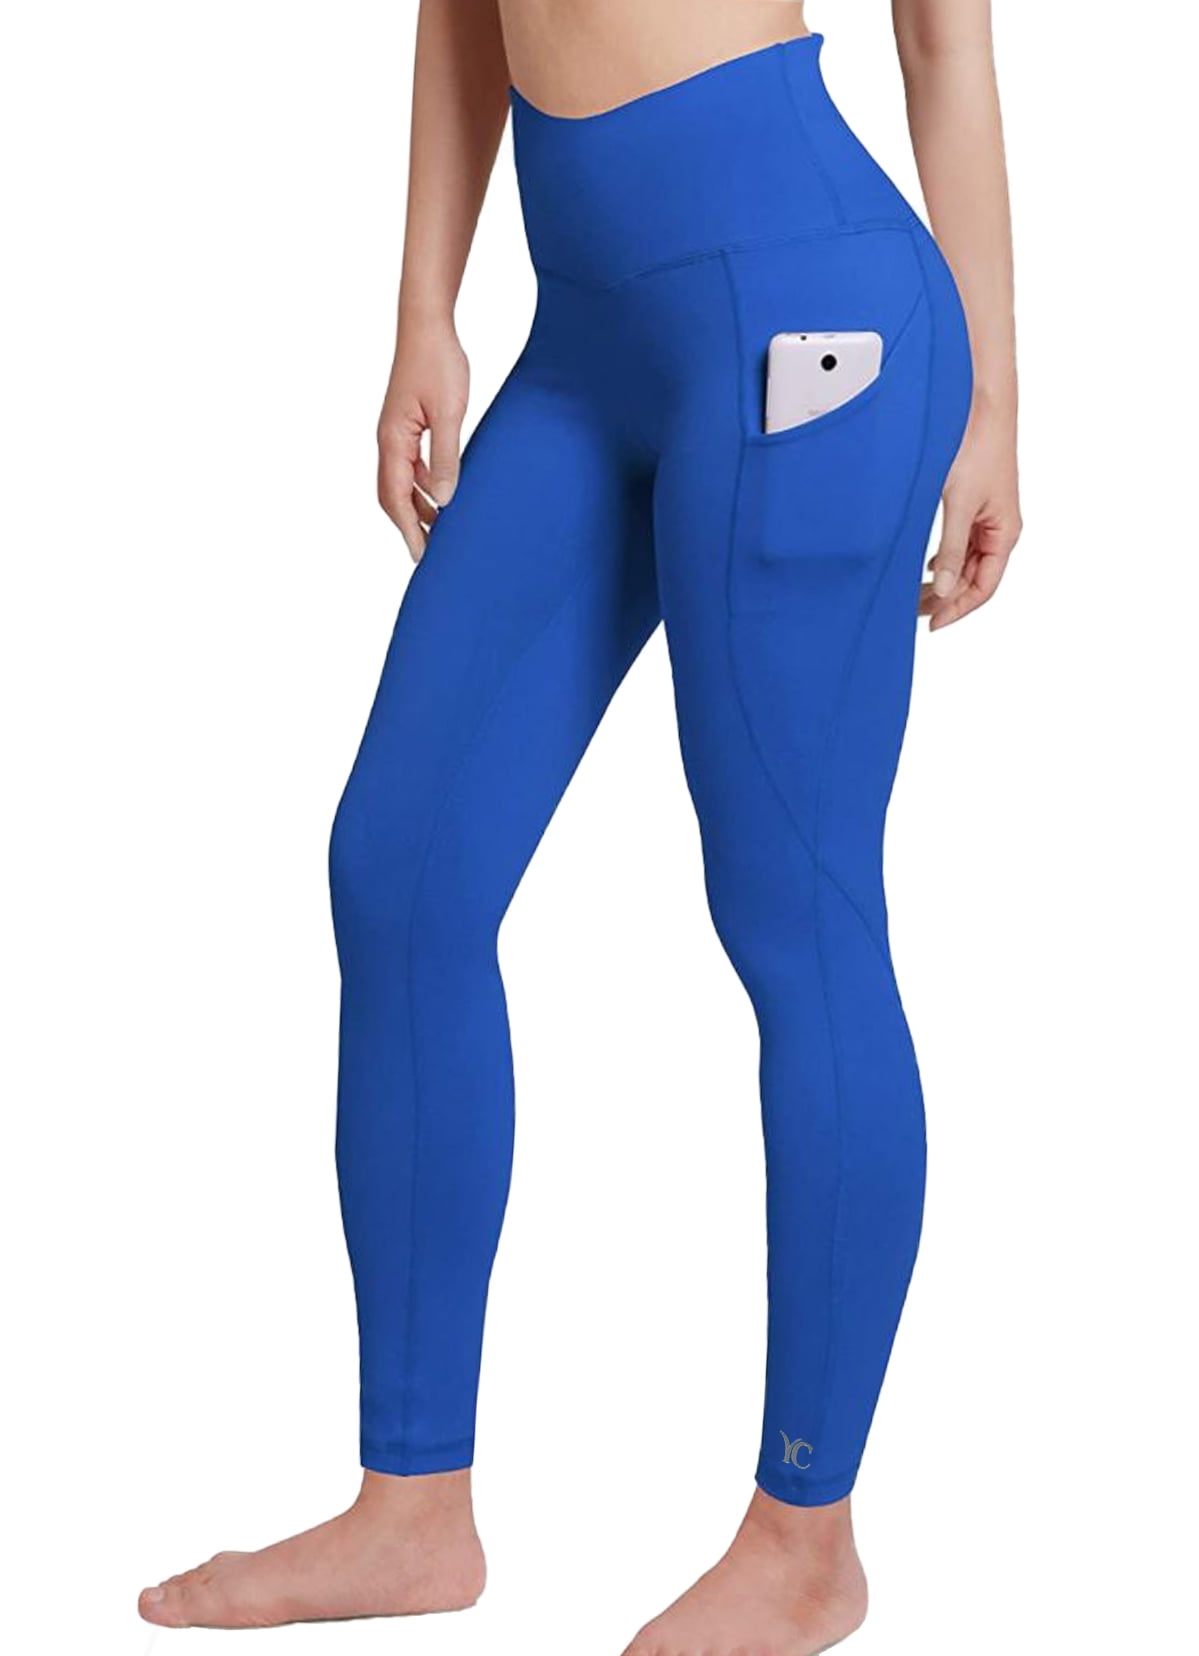 Sportika Performanse High Waist Legging - Pocket Yoga Pants - Walmart.com